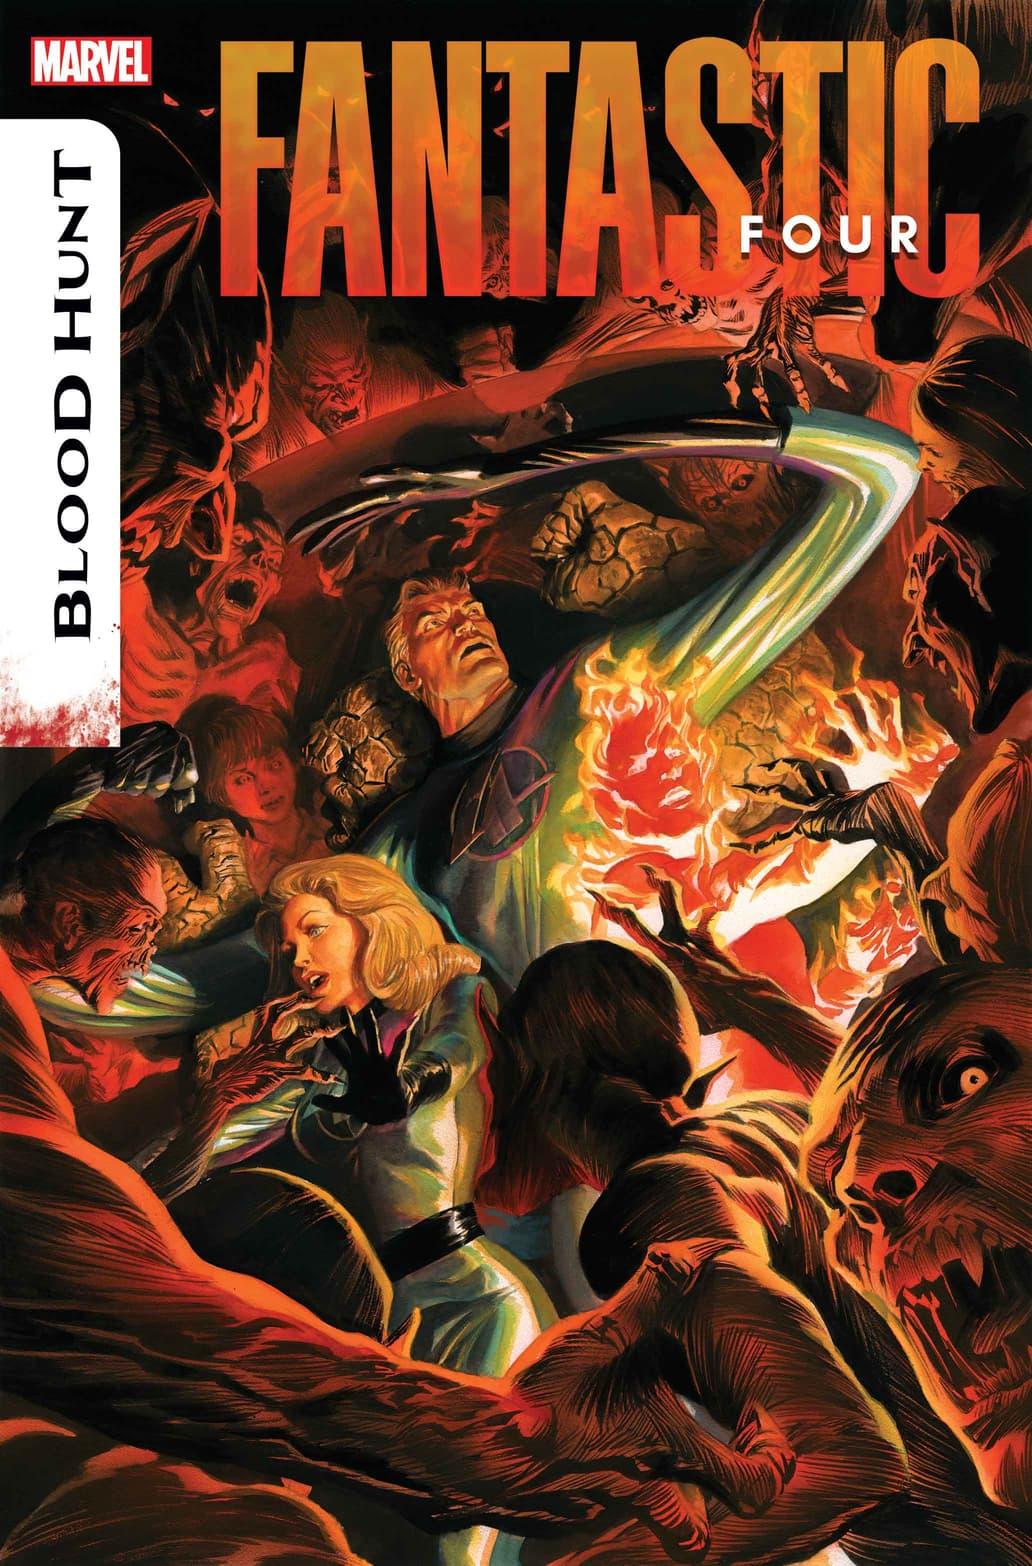 Fantastic Four #21 cover art